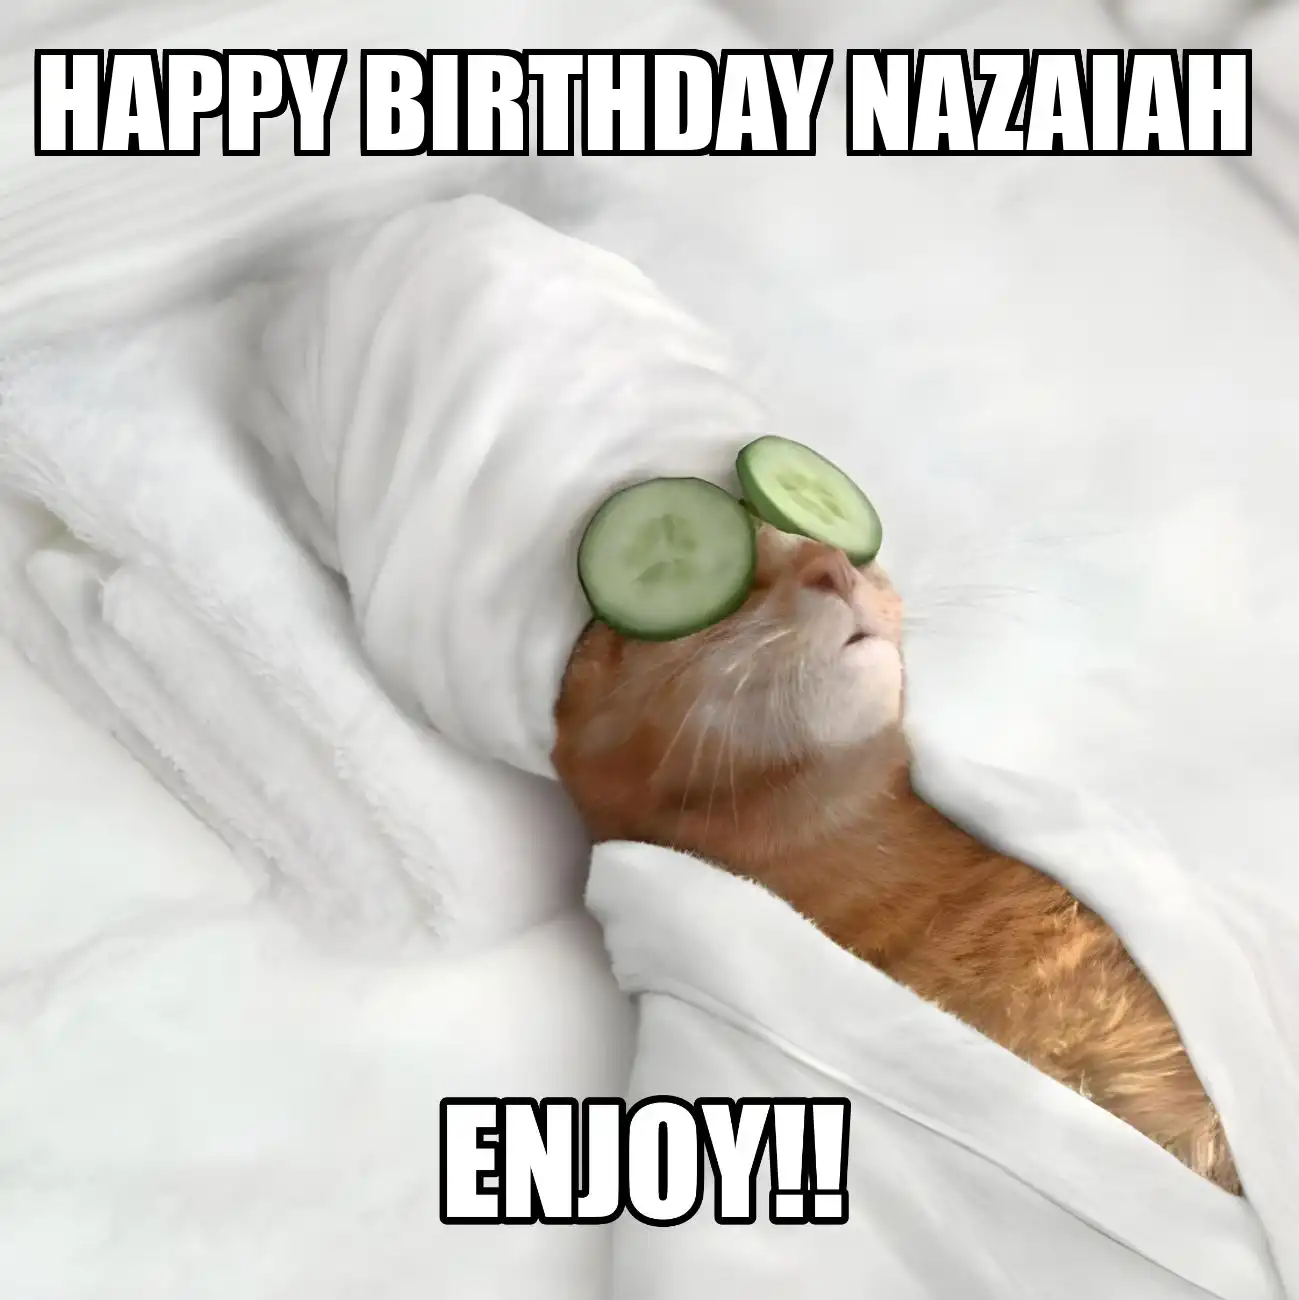 Happy Birthday Nazaiah Enjoy Cat Meme